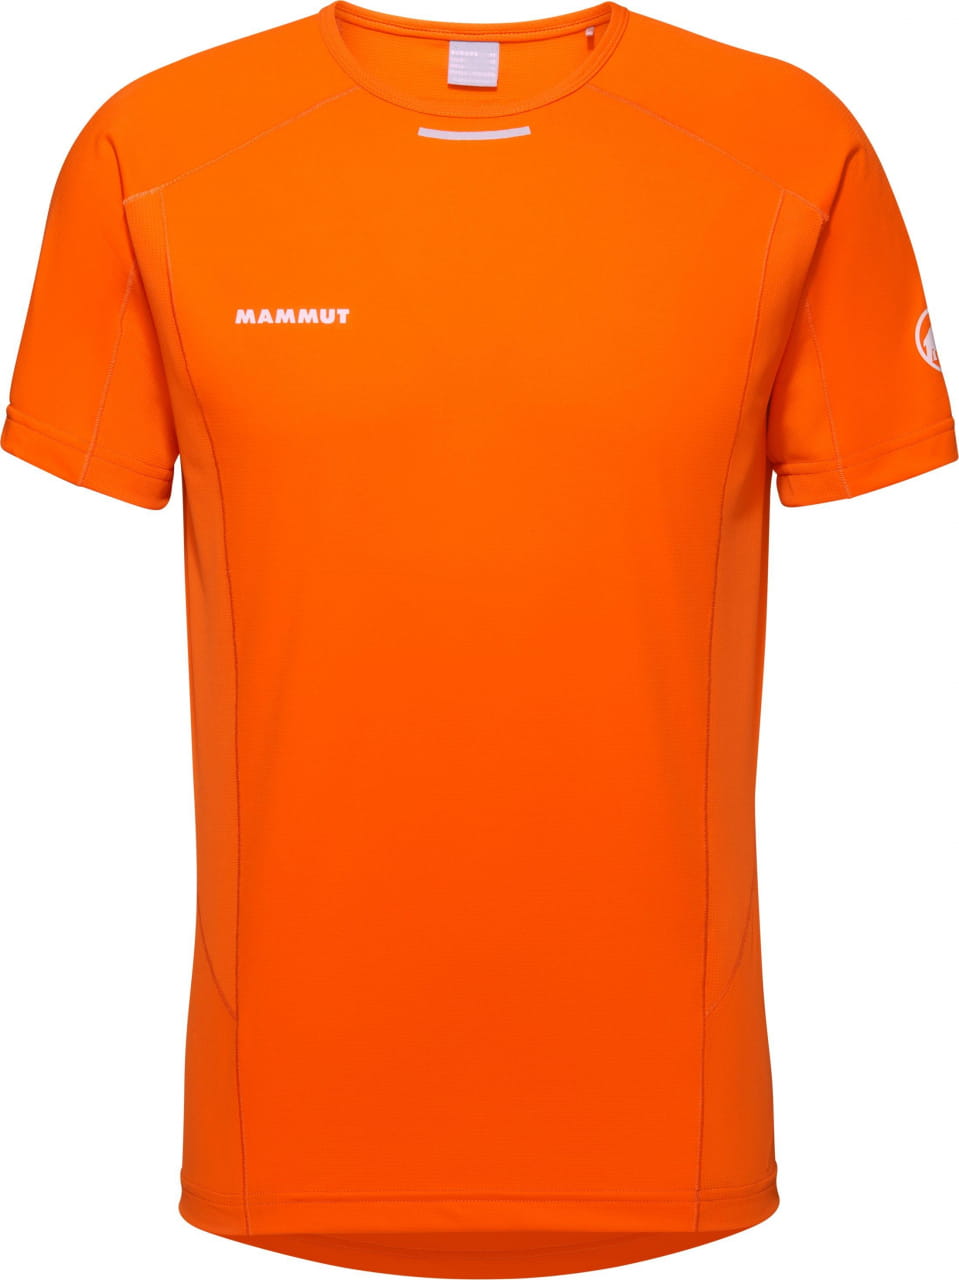 Sporthemd für Männer Mammut Aenergy FL T-Shirt Men